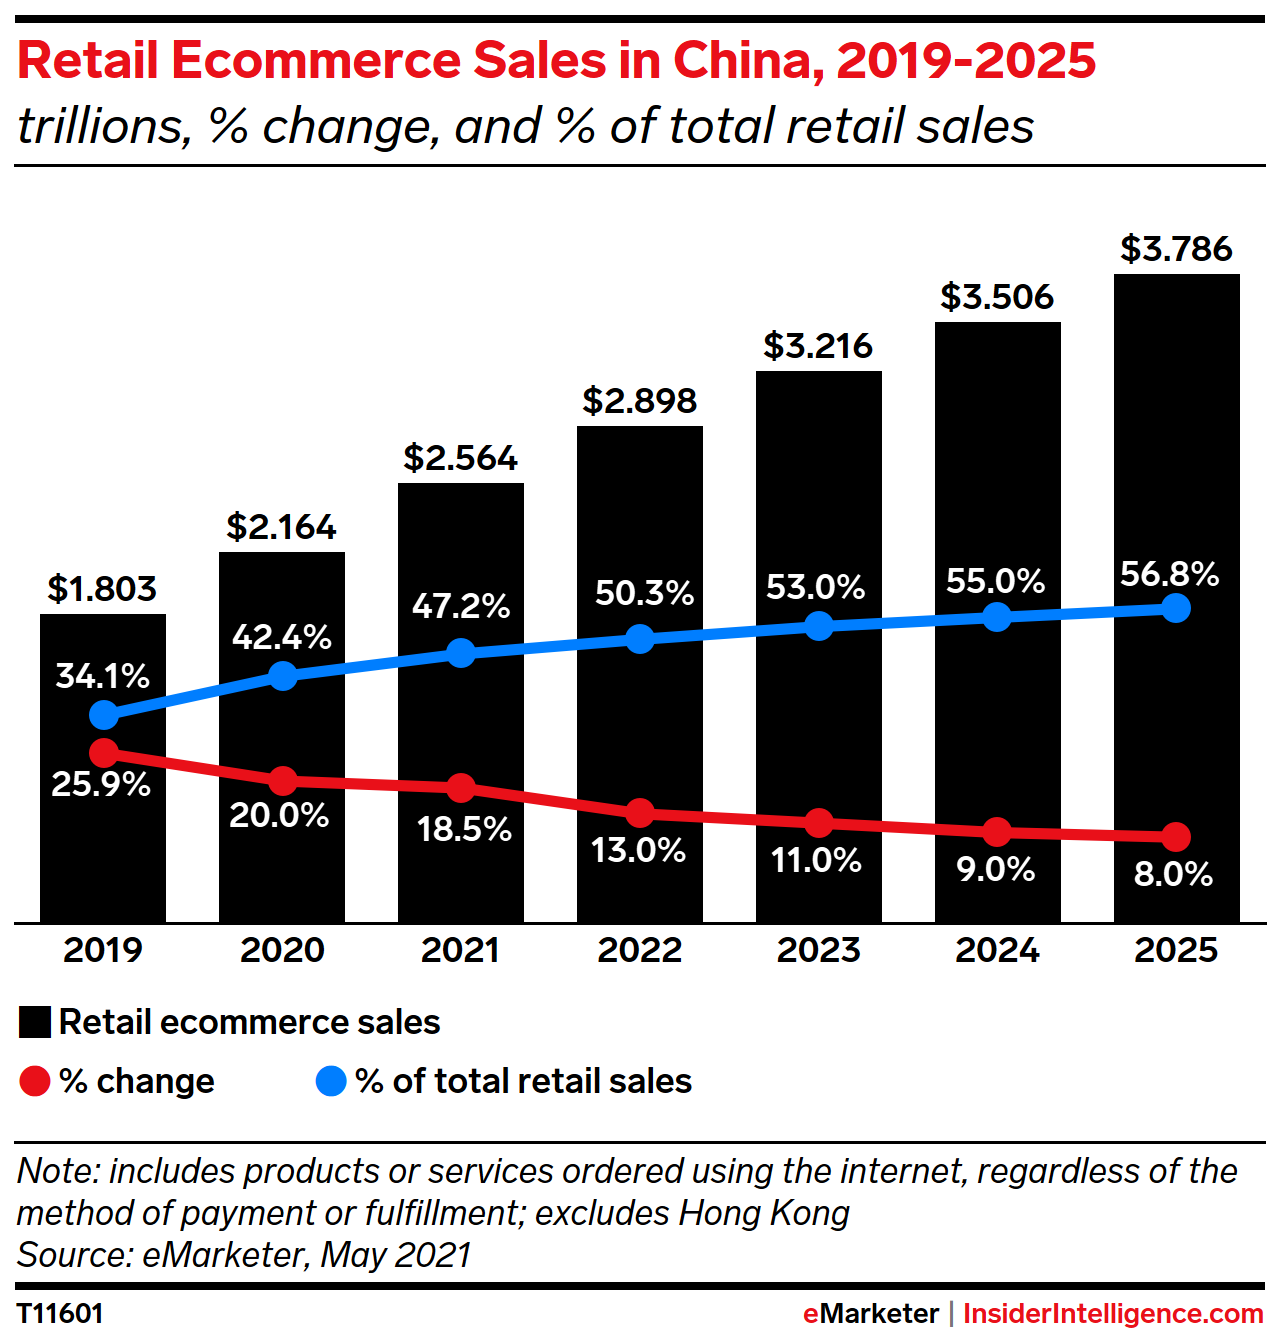 China Retail Ecommerce Sales 2019-2025